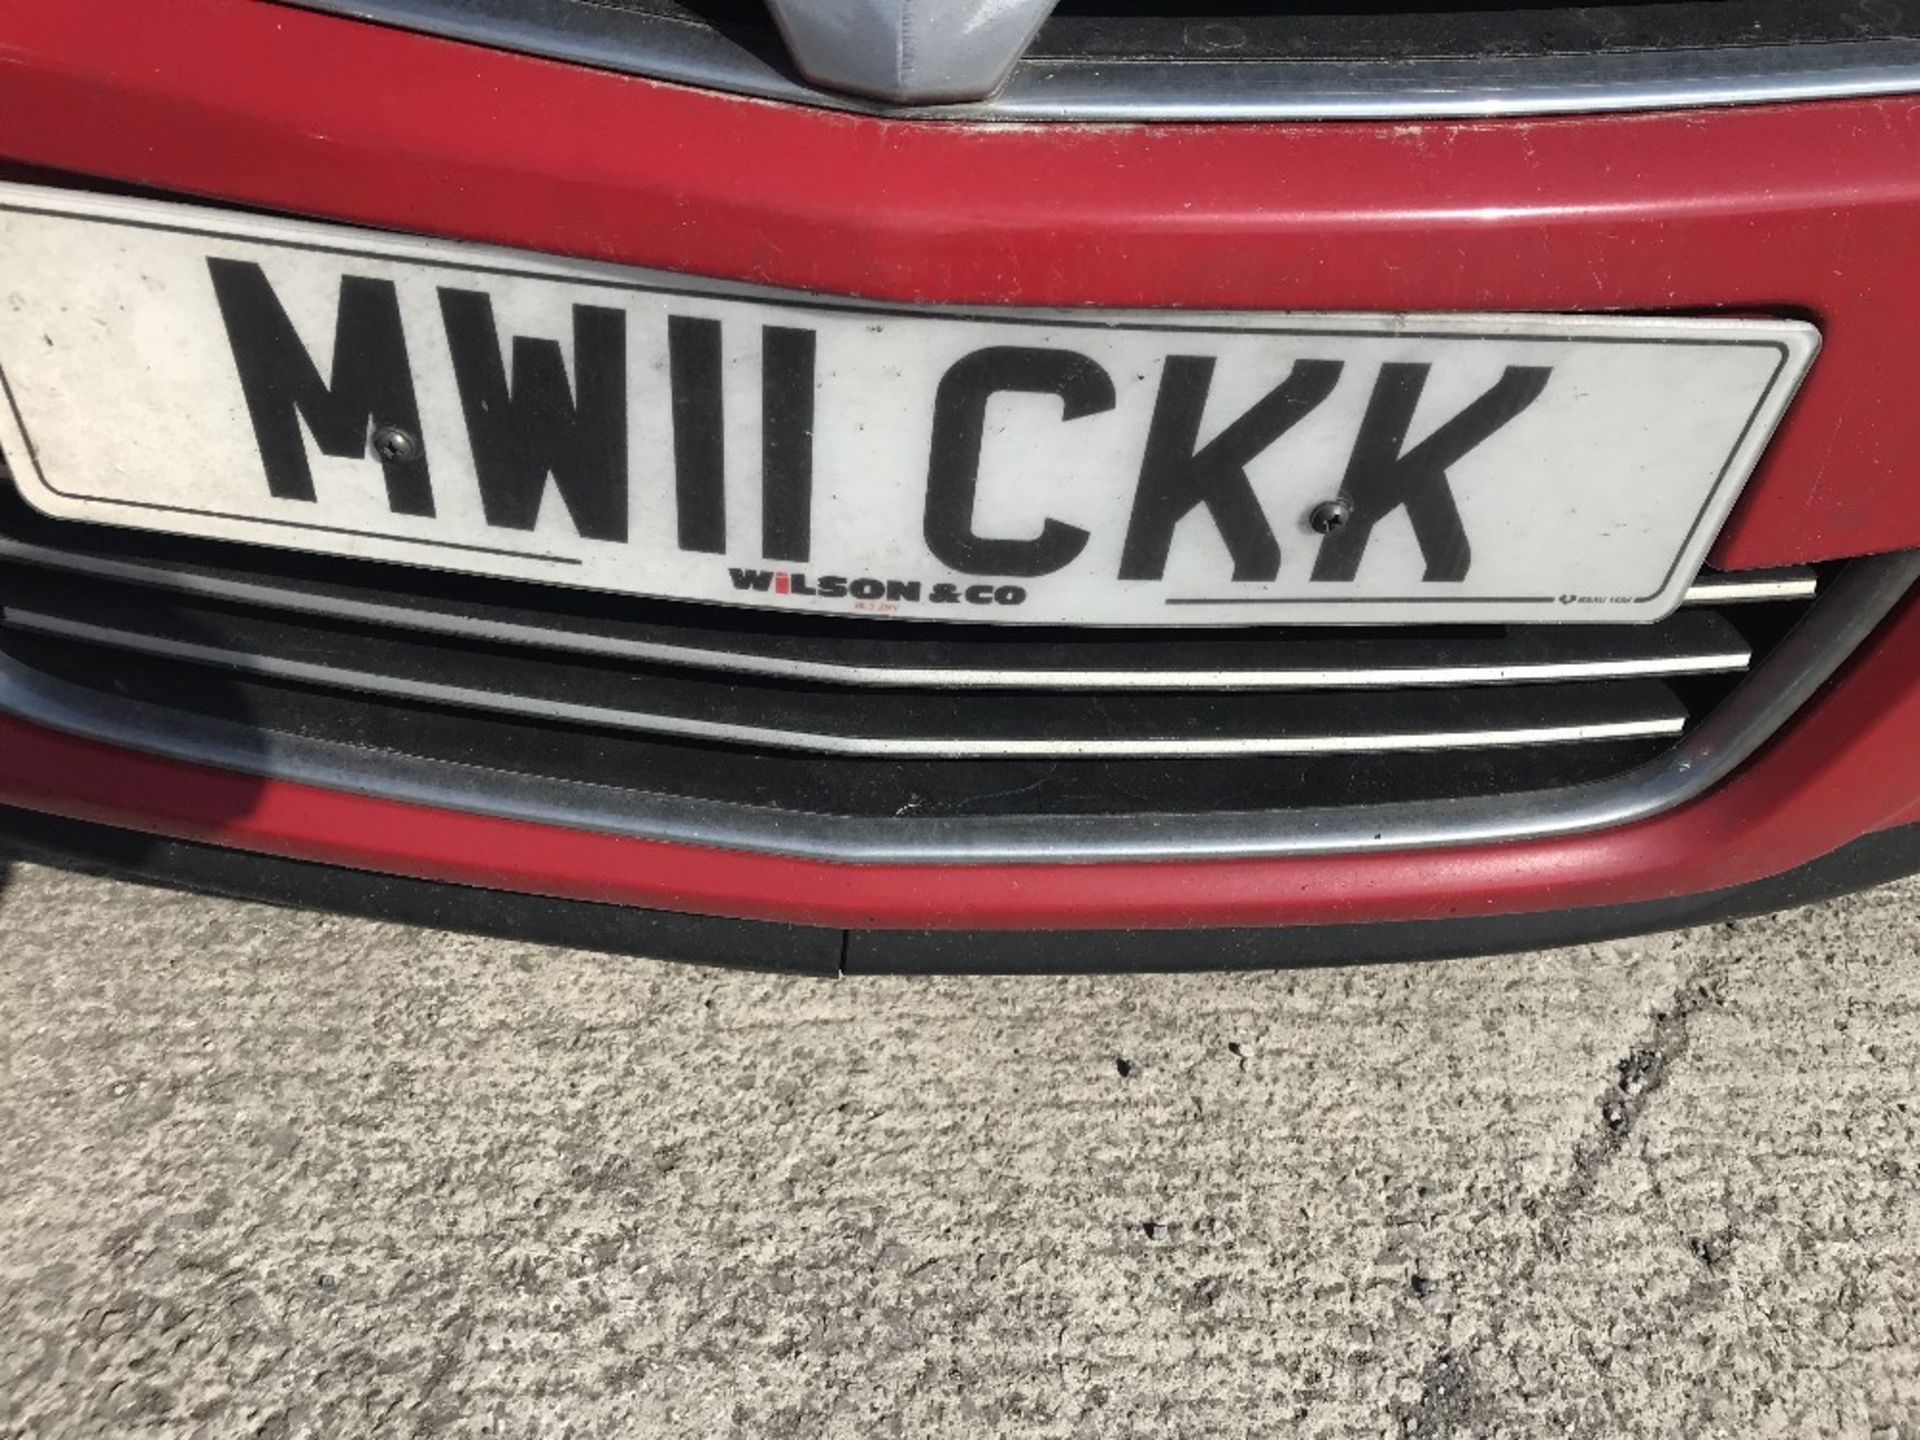 MW11 CKK Vauxhall Astra Club CDTi van, 1686cc diesel, Date of Registration 29.06.11, MOT to 29.06.